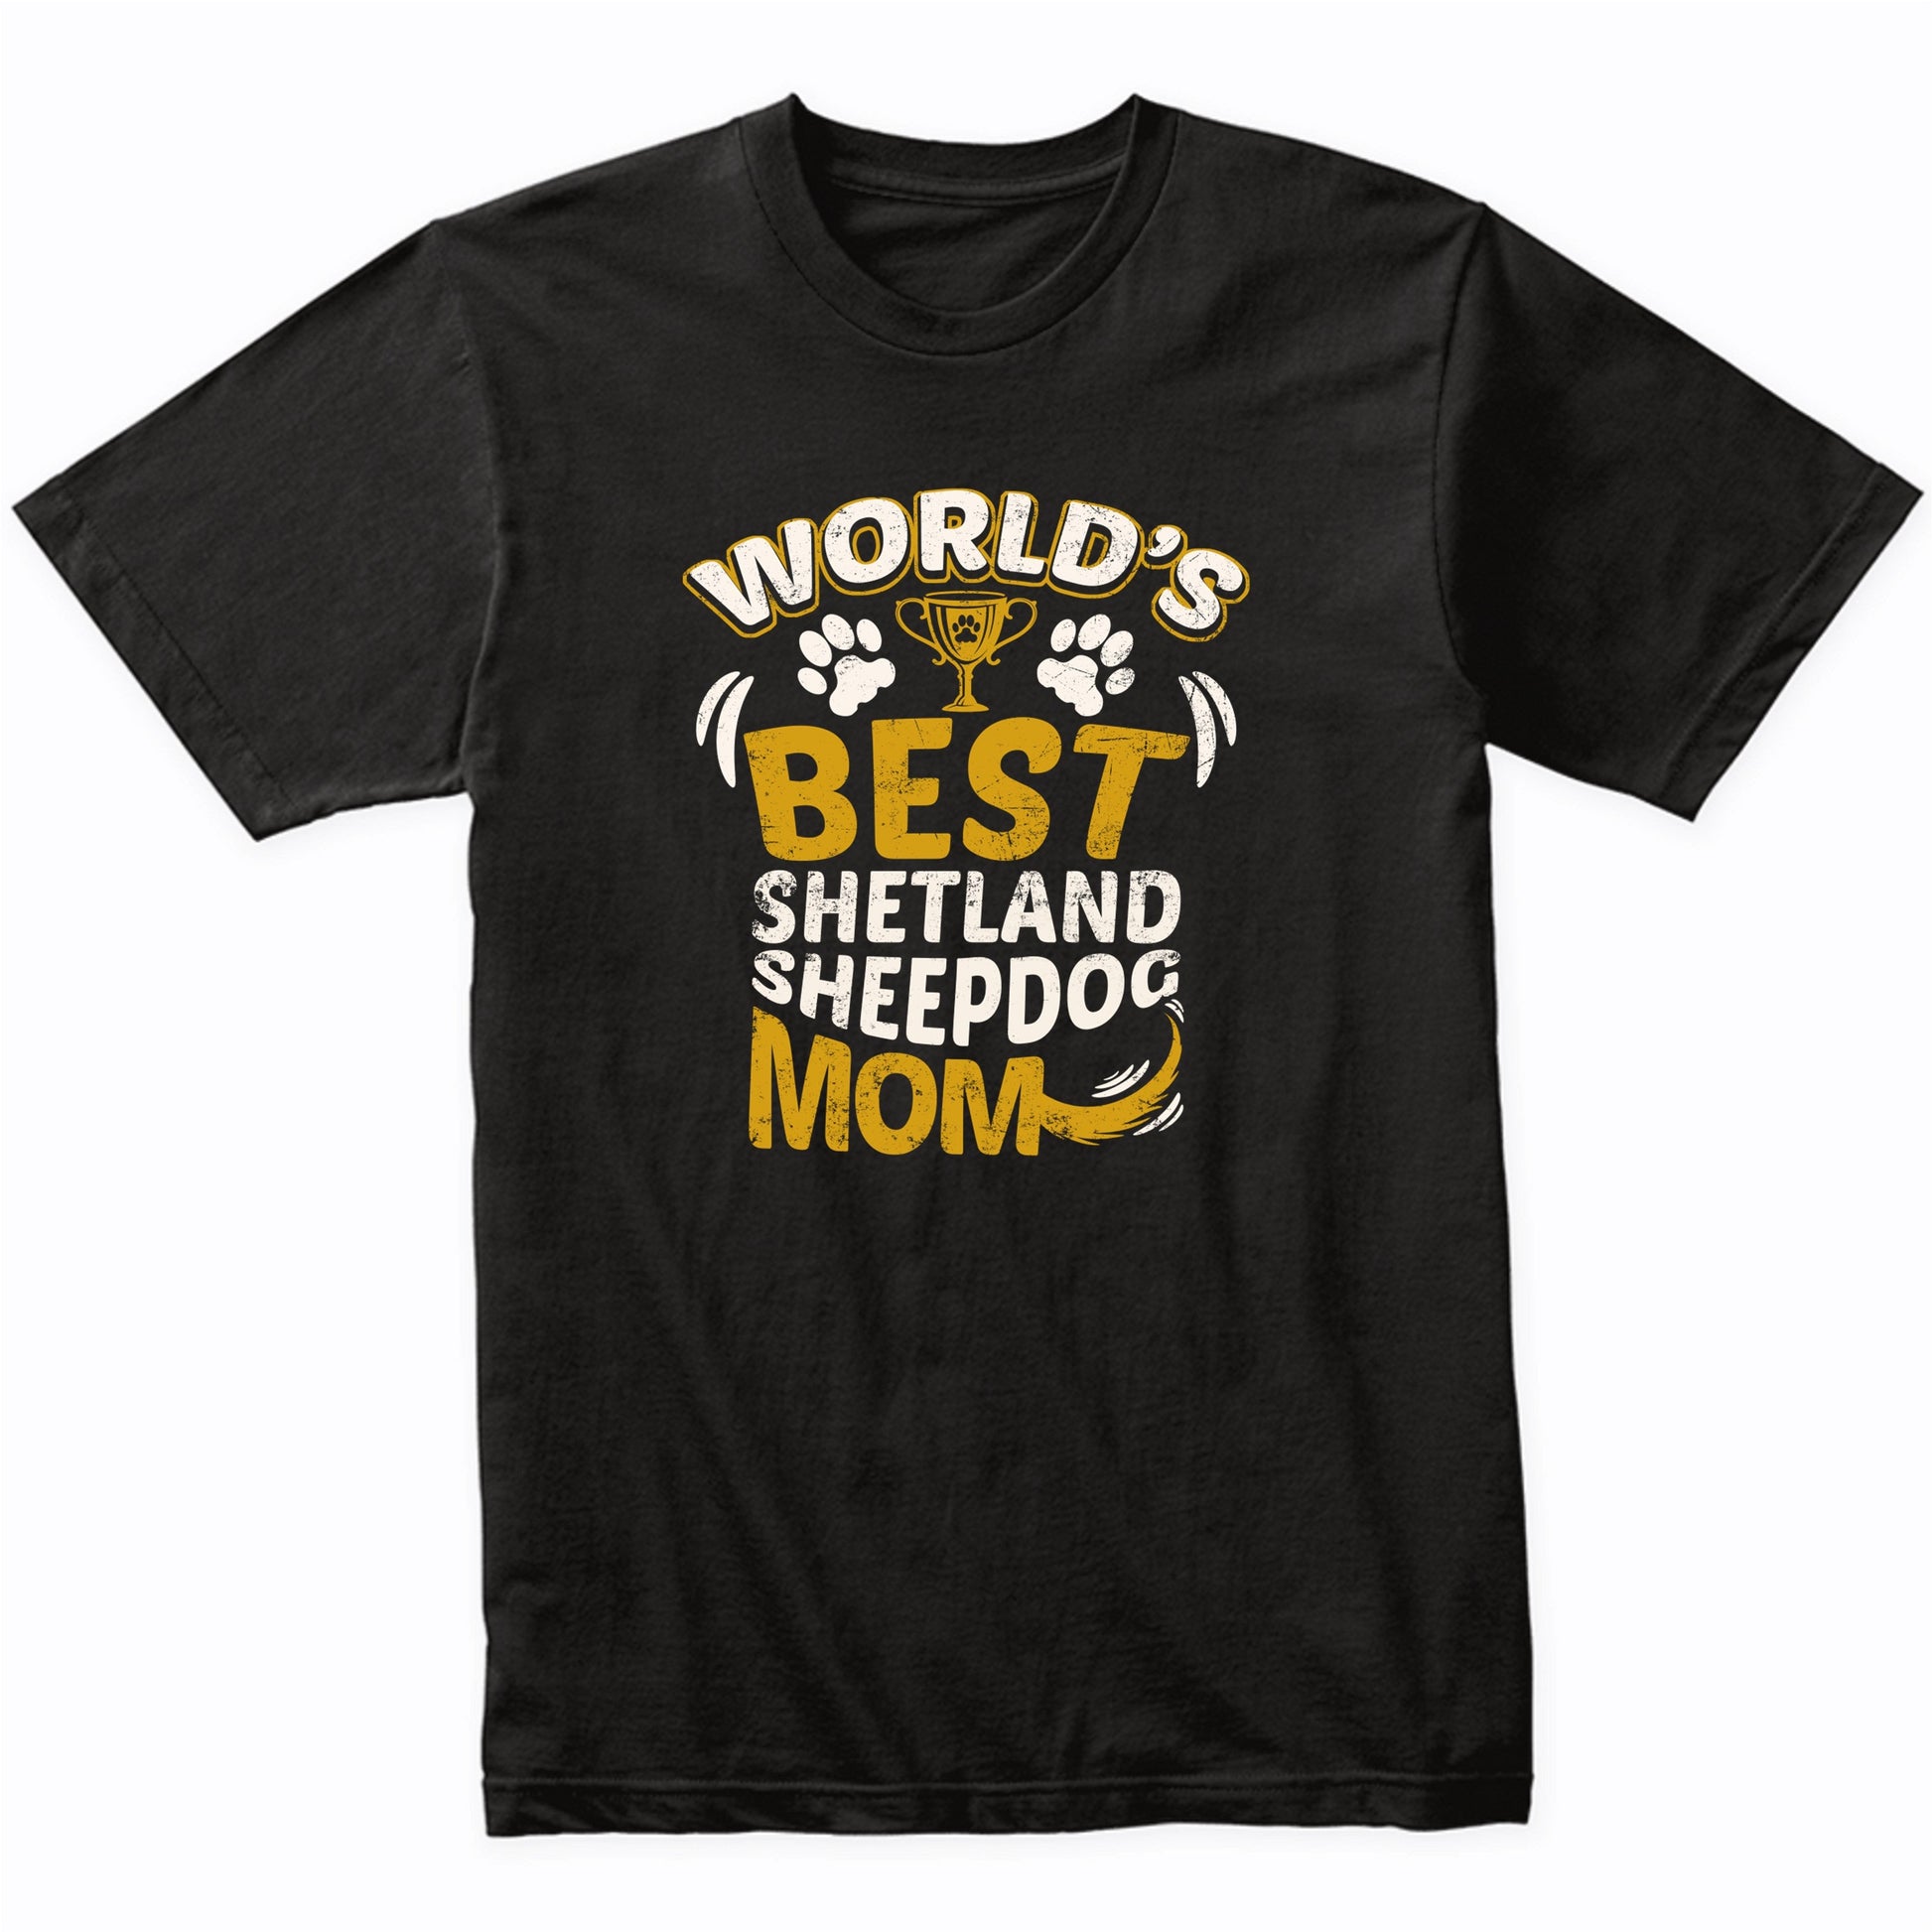 World's Best Shetland Sheepdog Mom Graphic T-Shirt